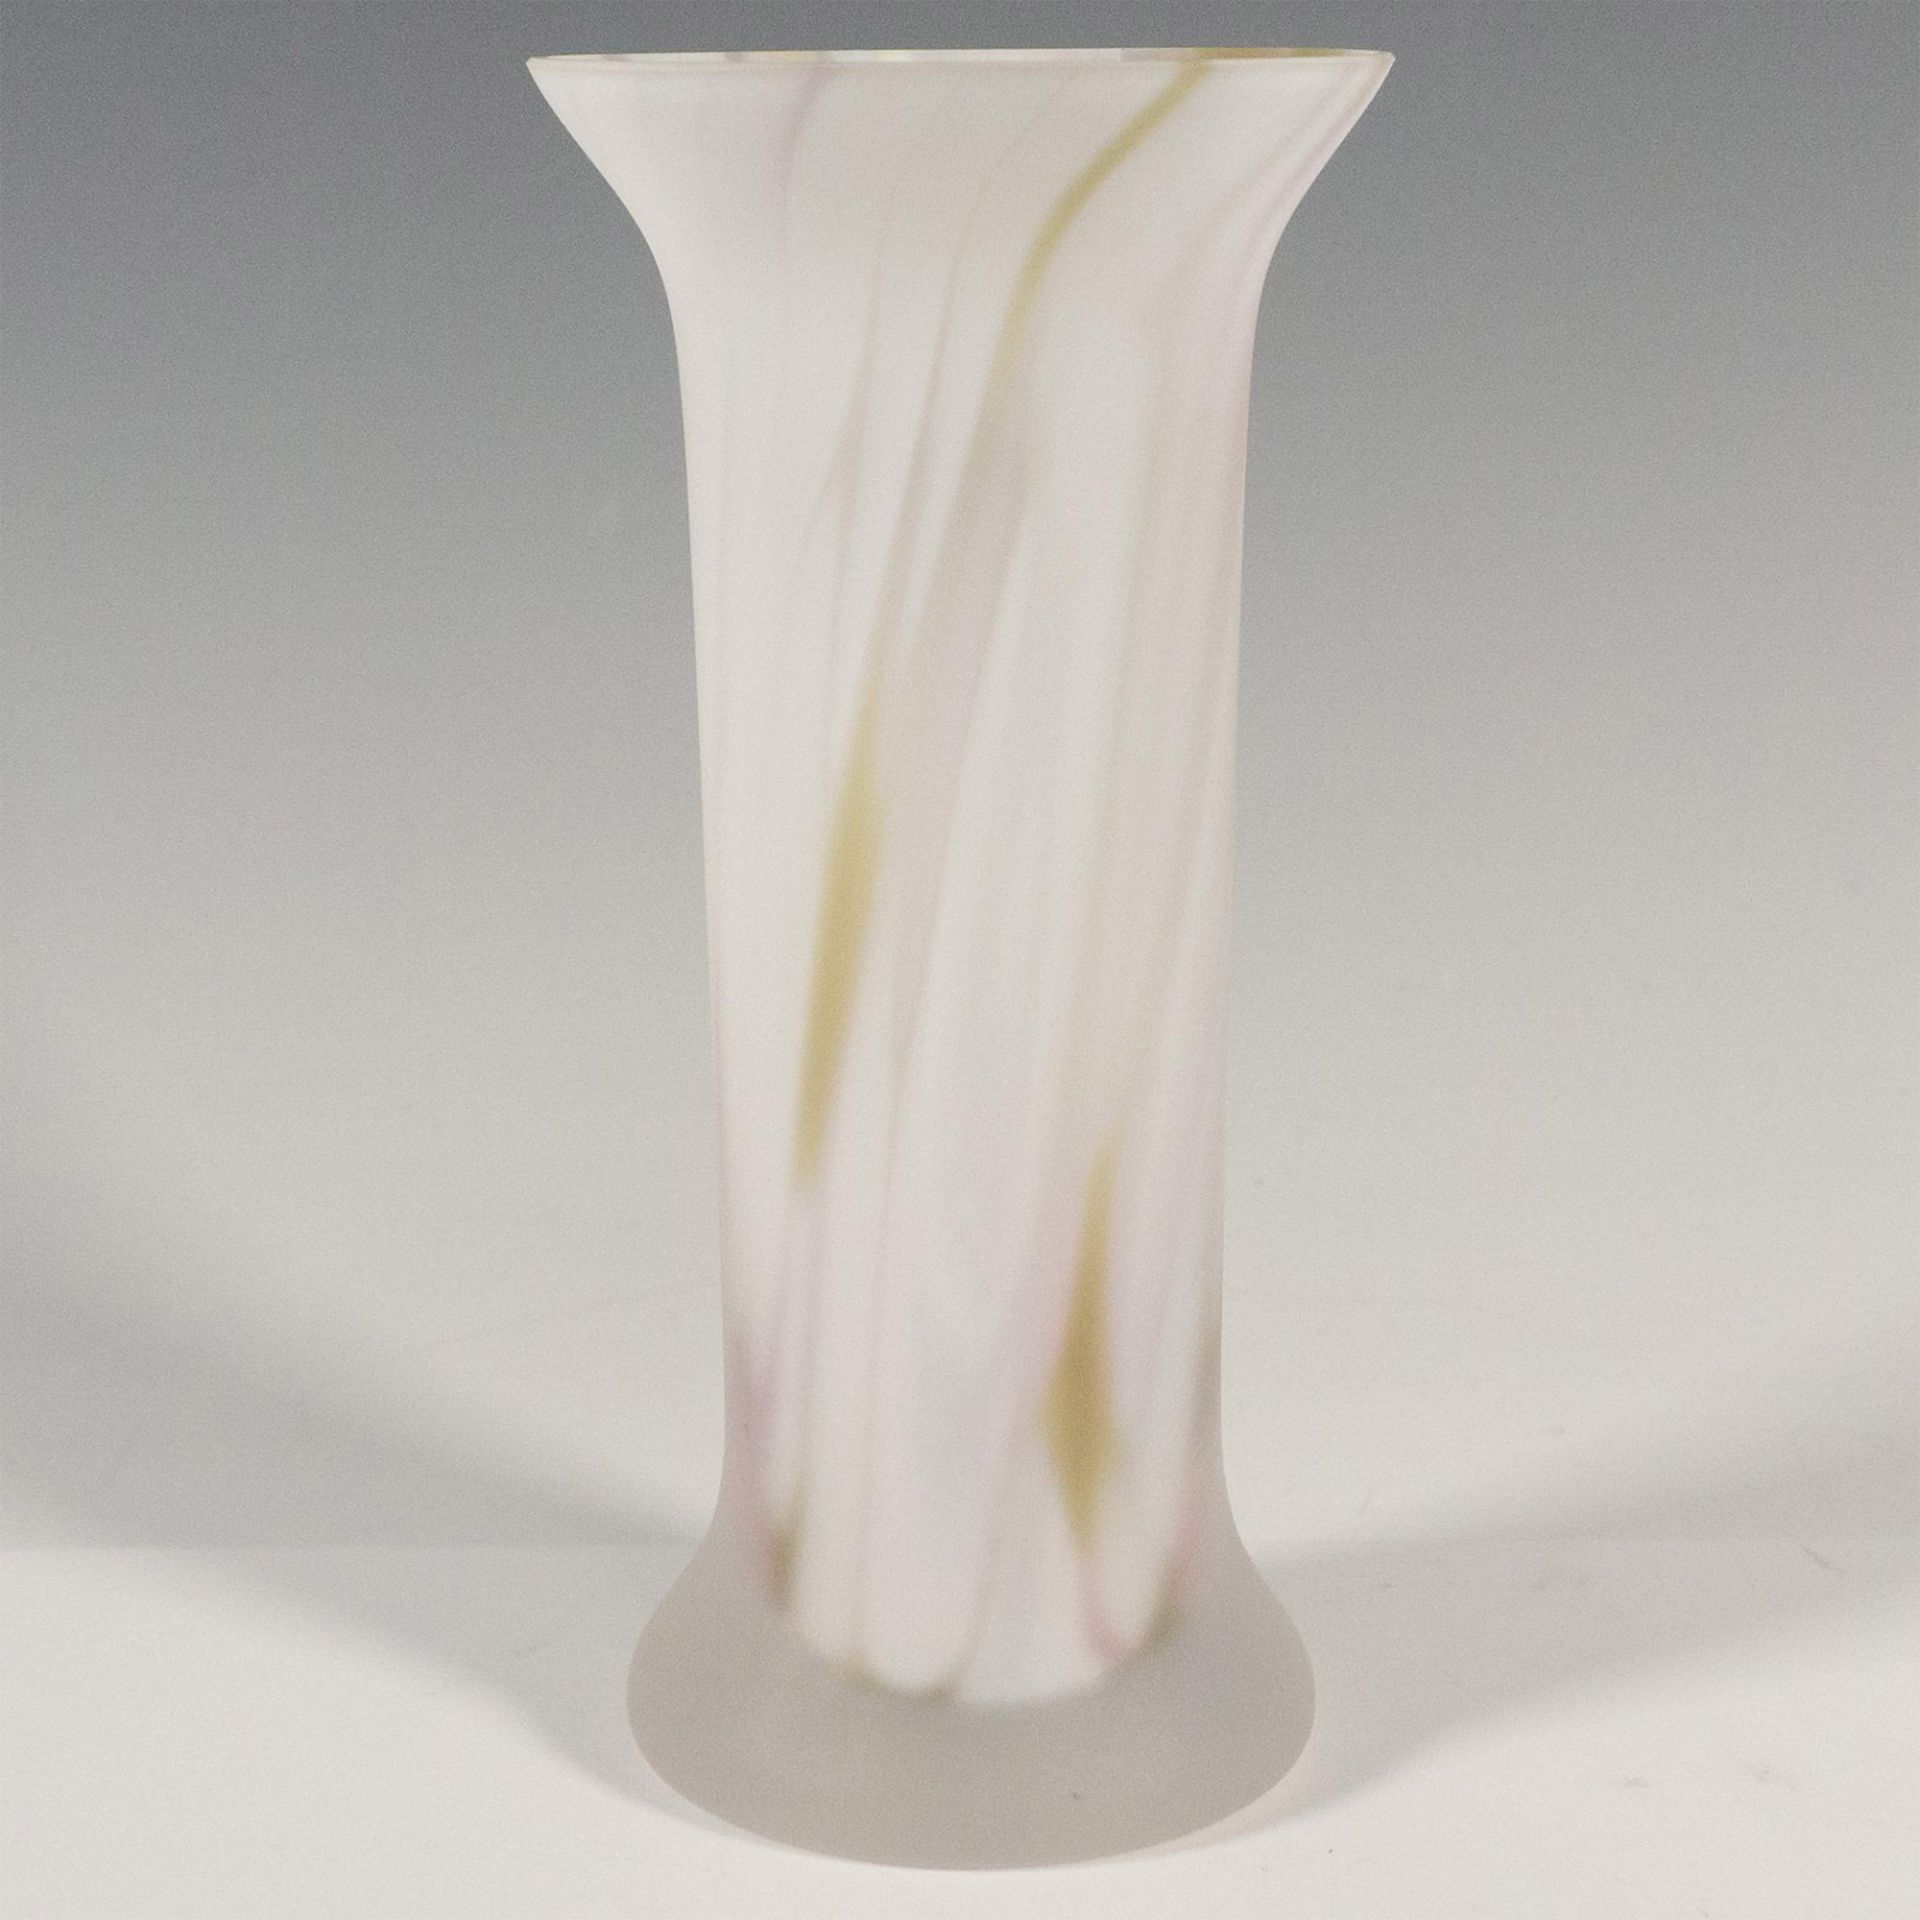 Kosta Boda by Monica Backstrom Glass Vase, Zelda - Image 2 of 4